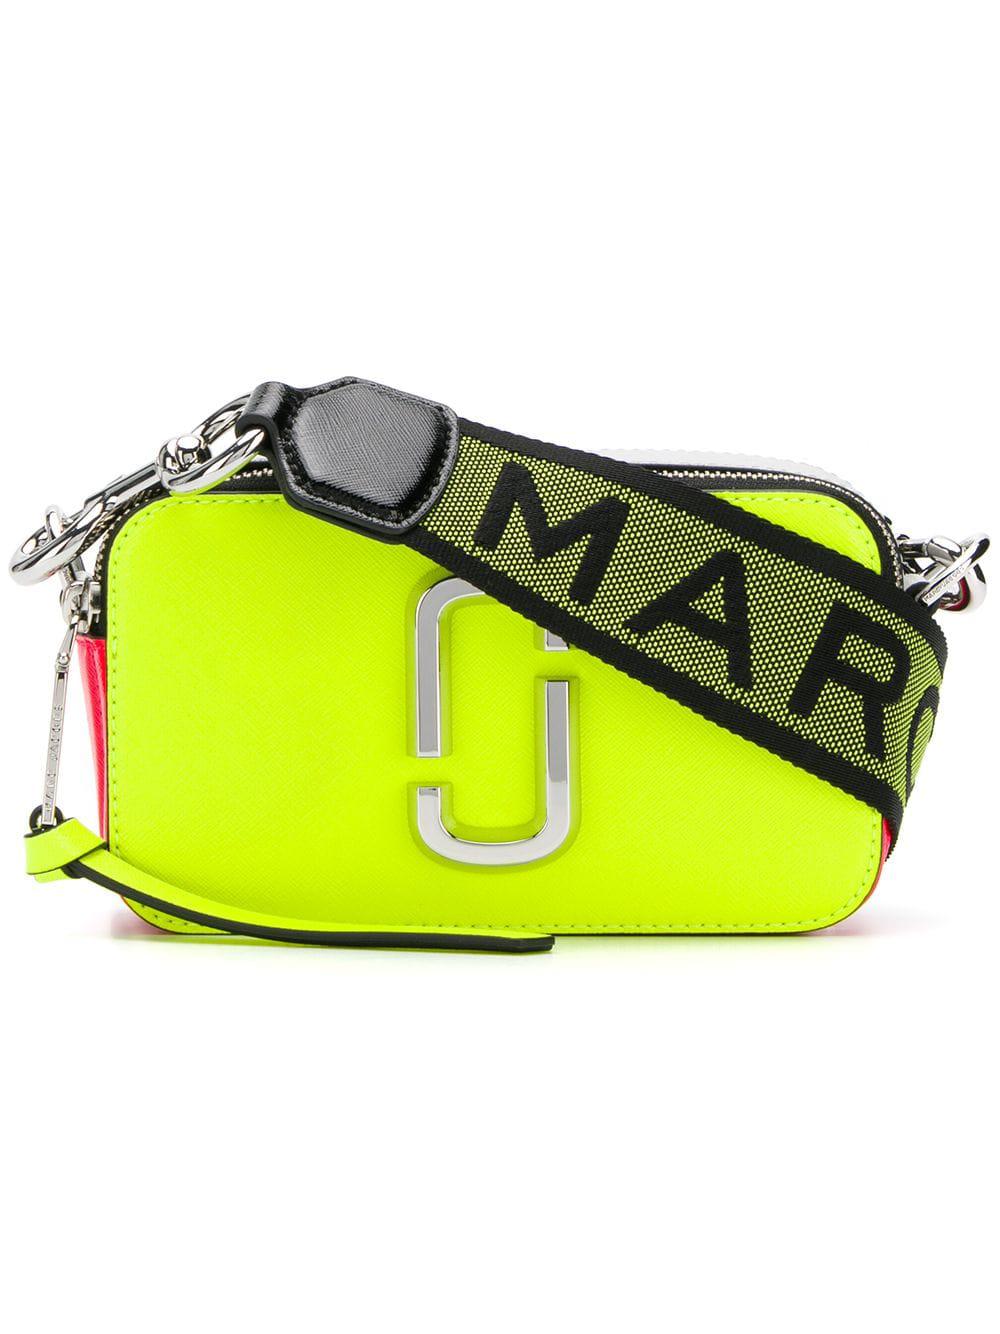 Marc Jacobs Neon Yellow Snapshot Bag | Lyst